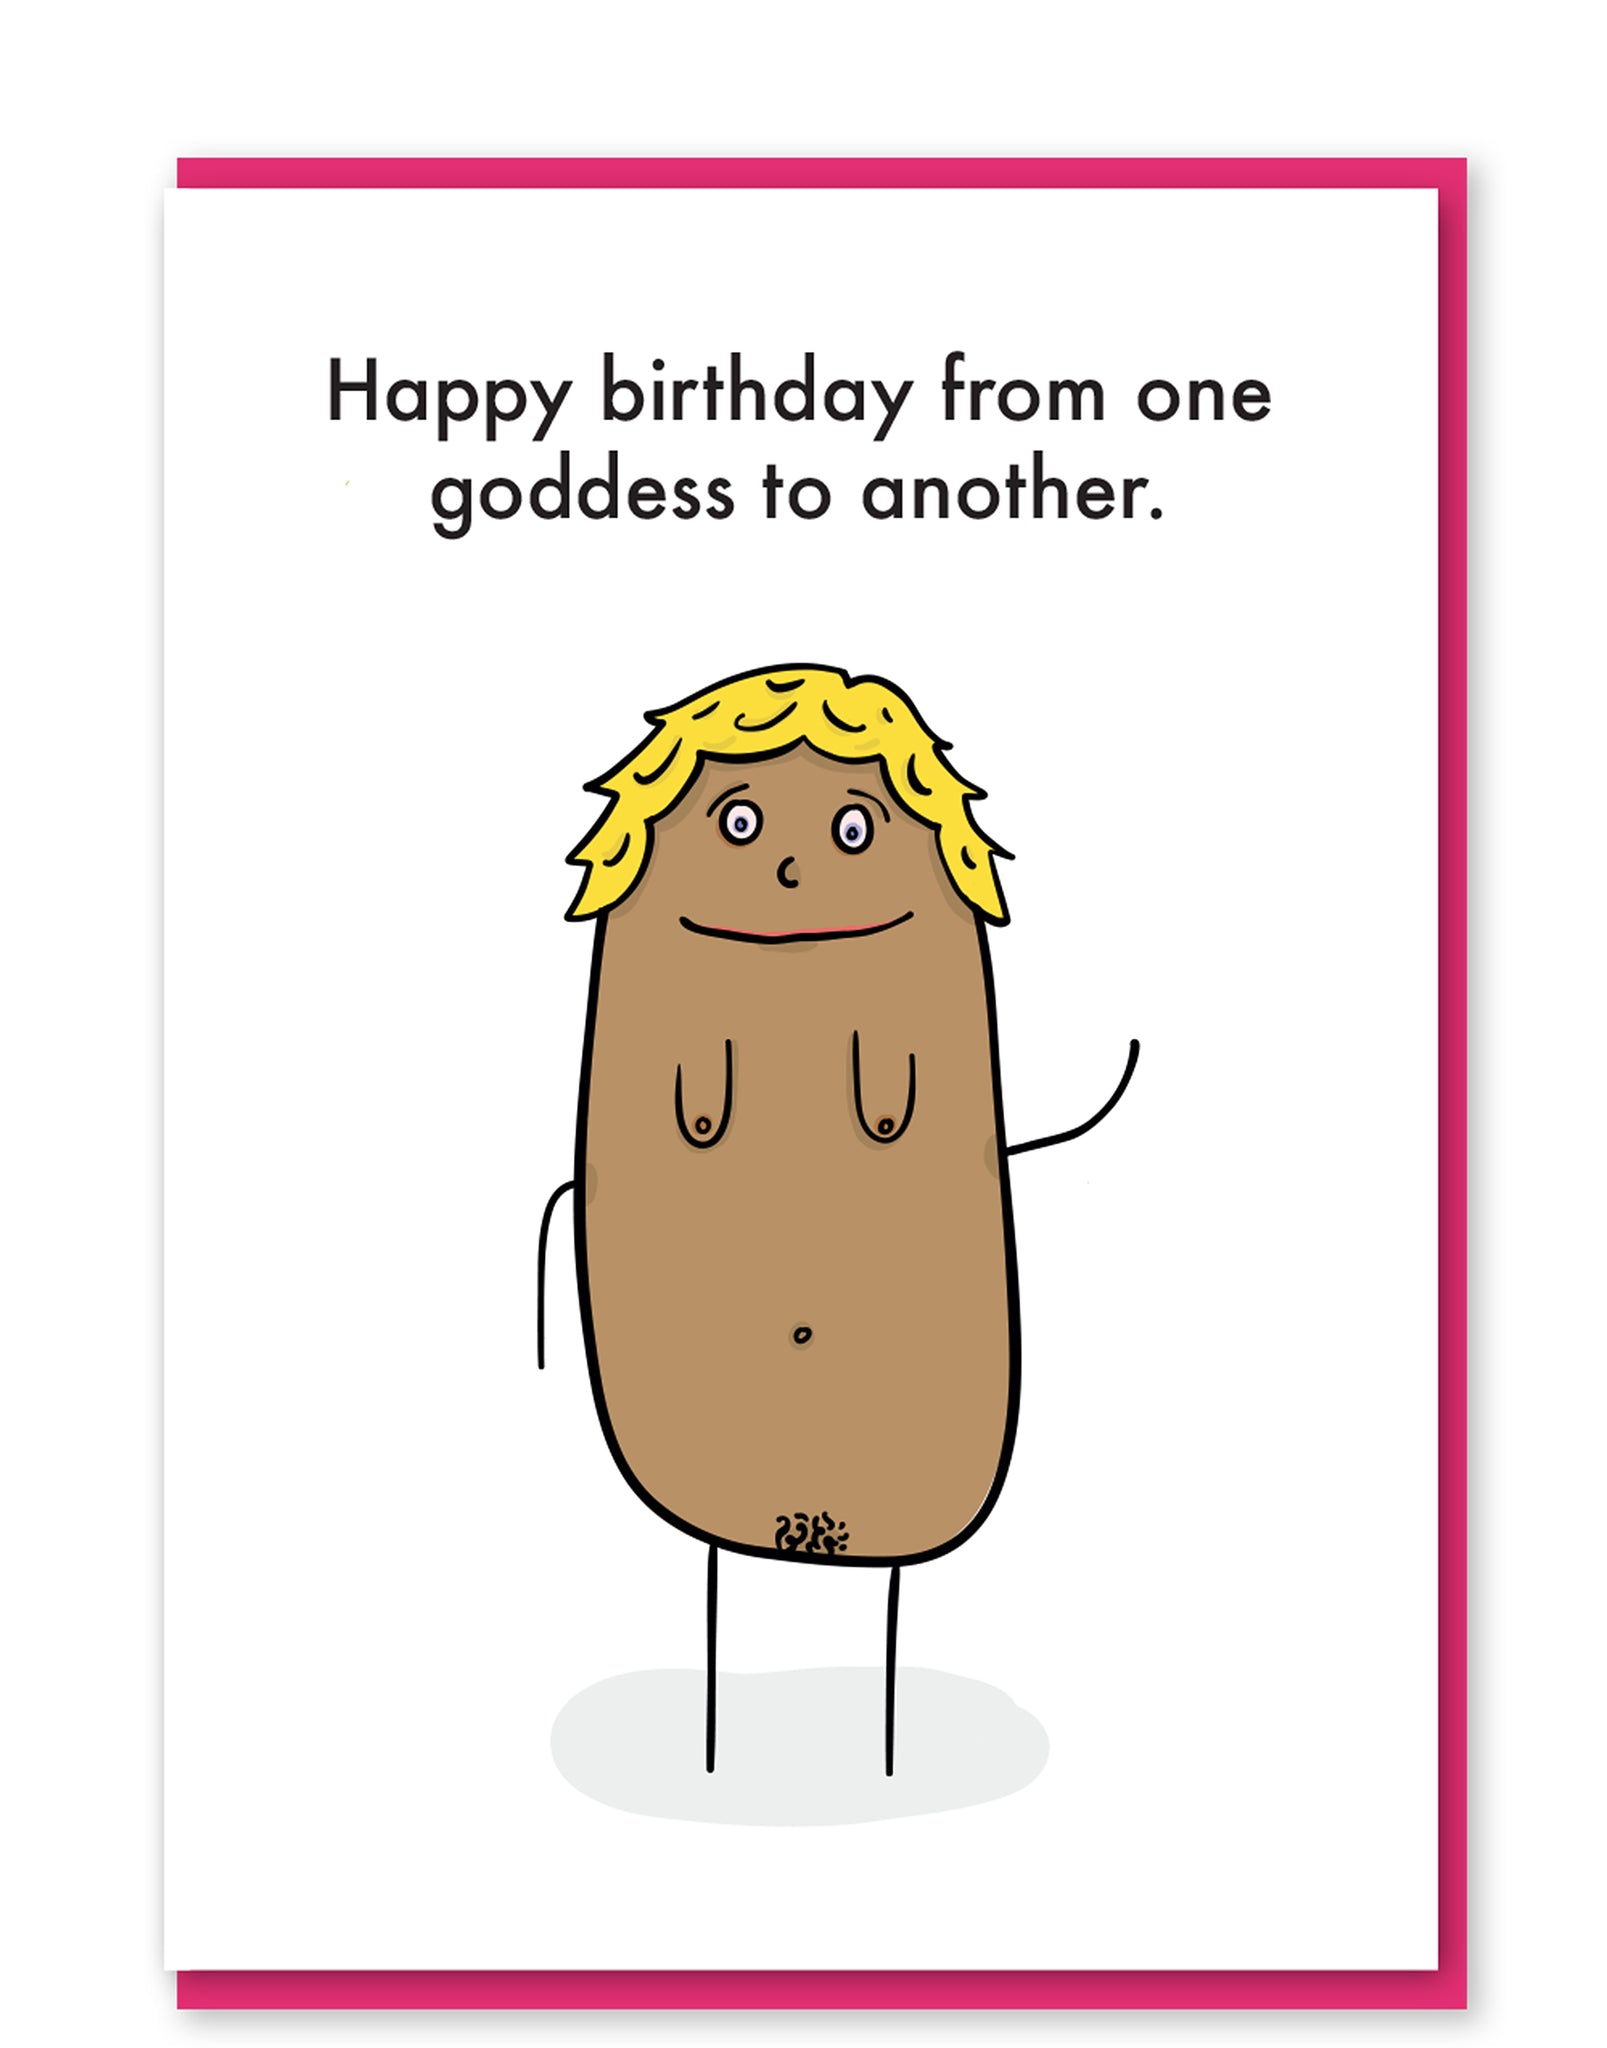 Goddess birthday card